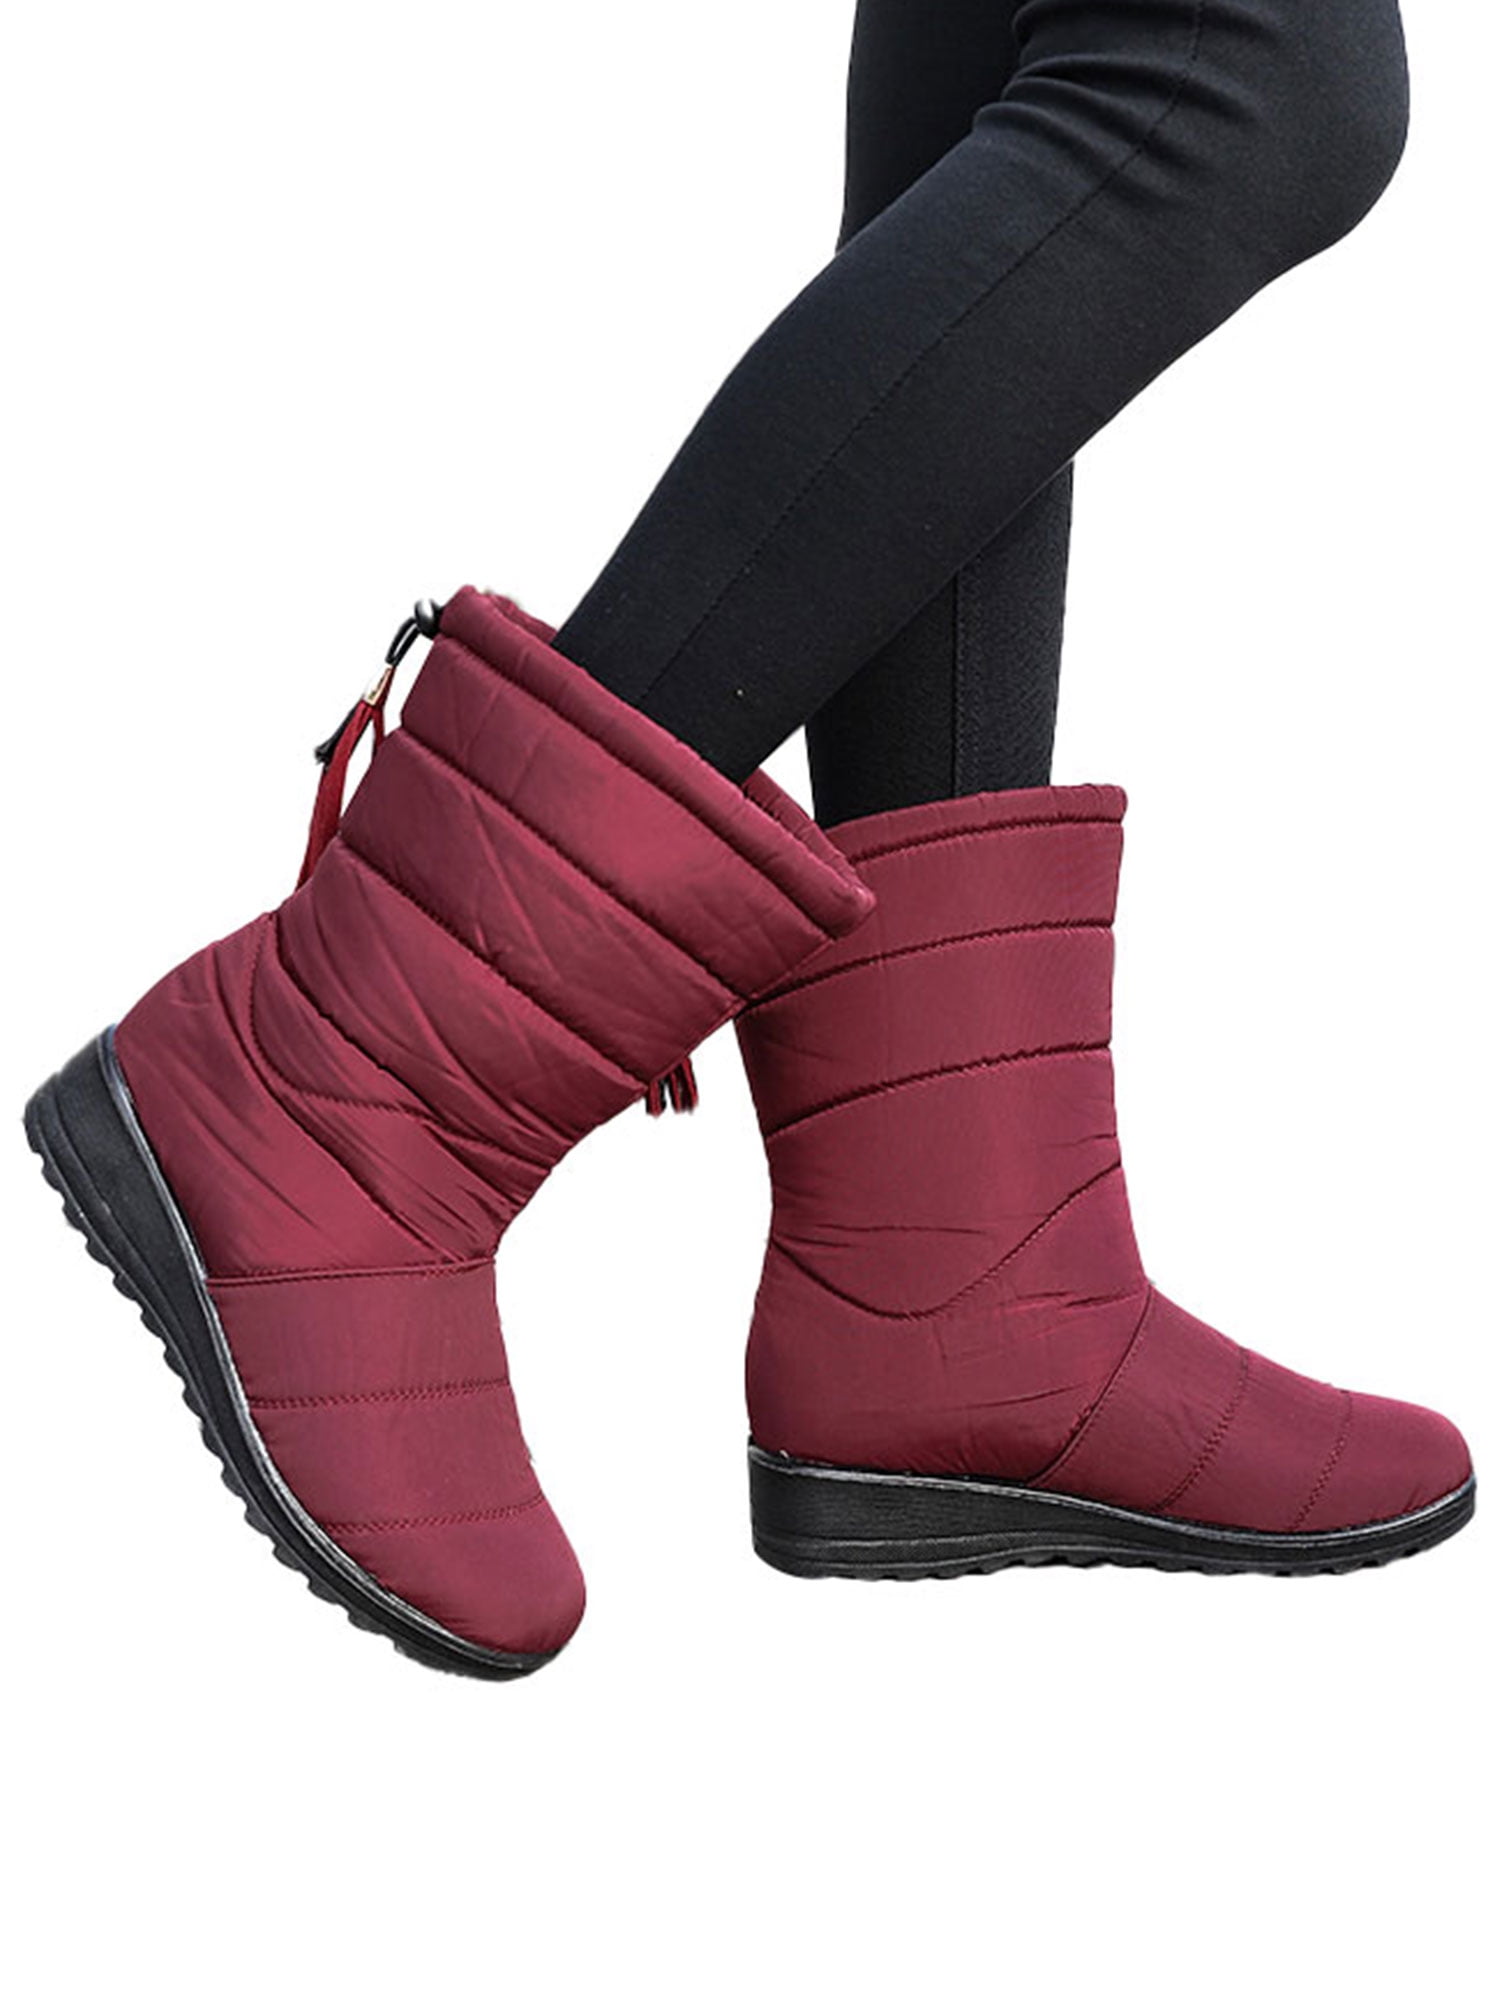 Womens Winter Warm Snow Mid Calf Boots Rabbit Fur Side Zipper Casual Snow Shoes 